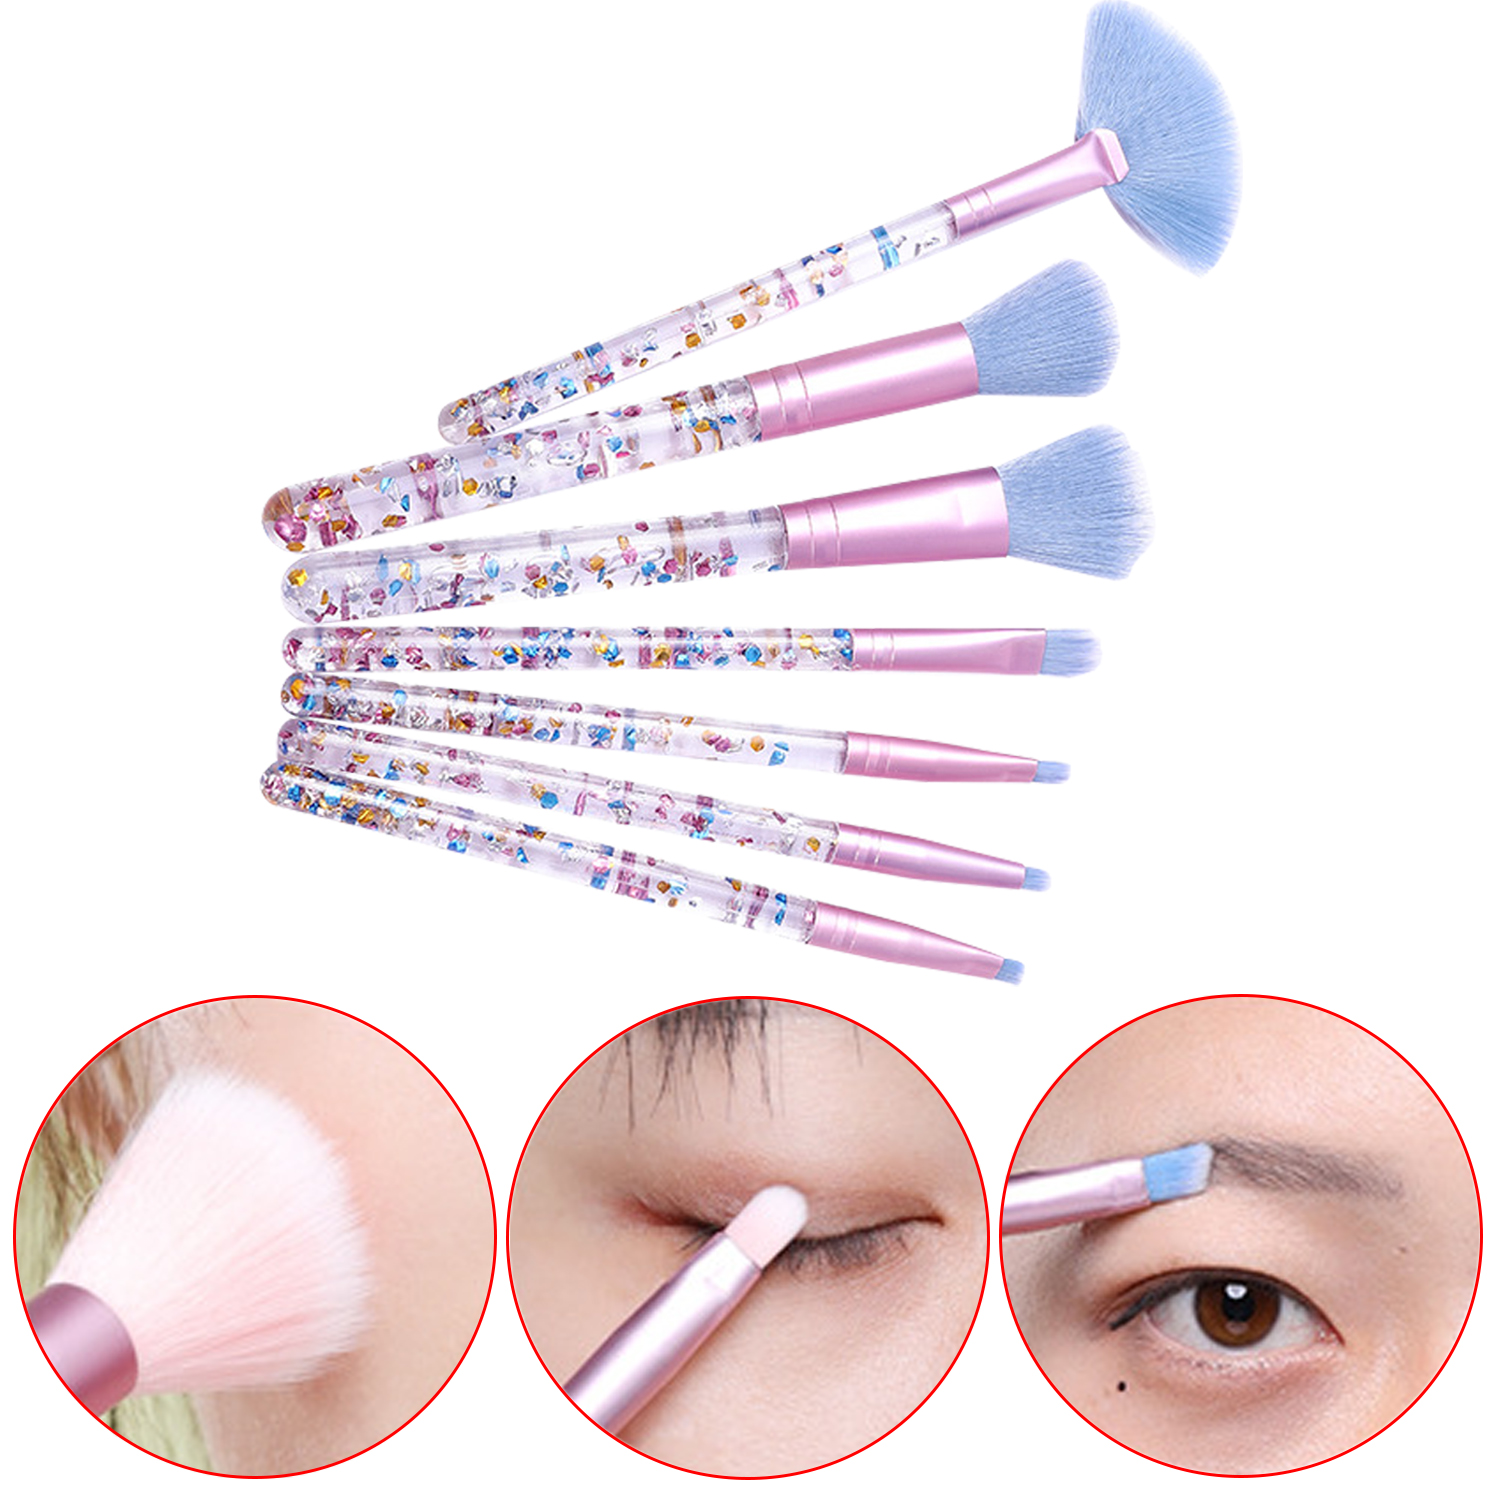 Wholesale Multi Function 7 Pcs Makeup Brush Set Synthetic Hair Crystal Glitter Bling Handle Face Makeup Brushes Set